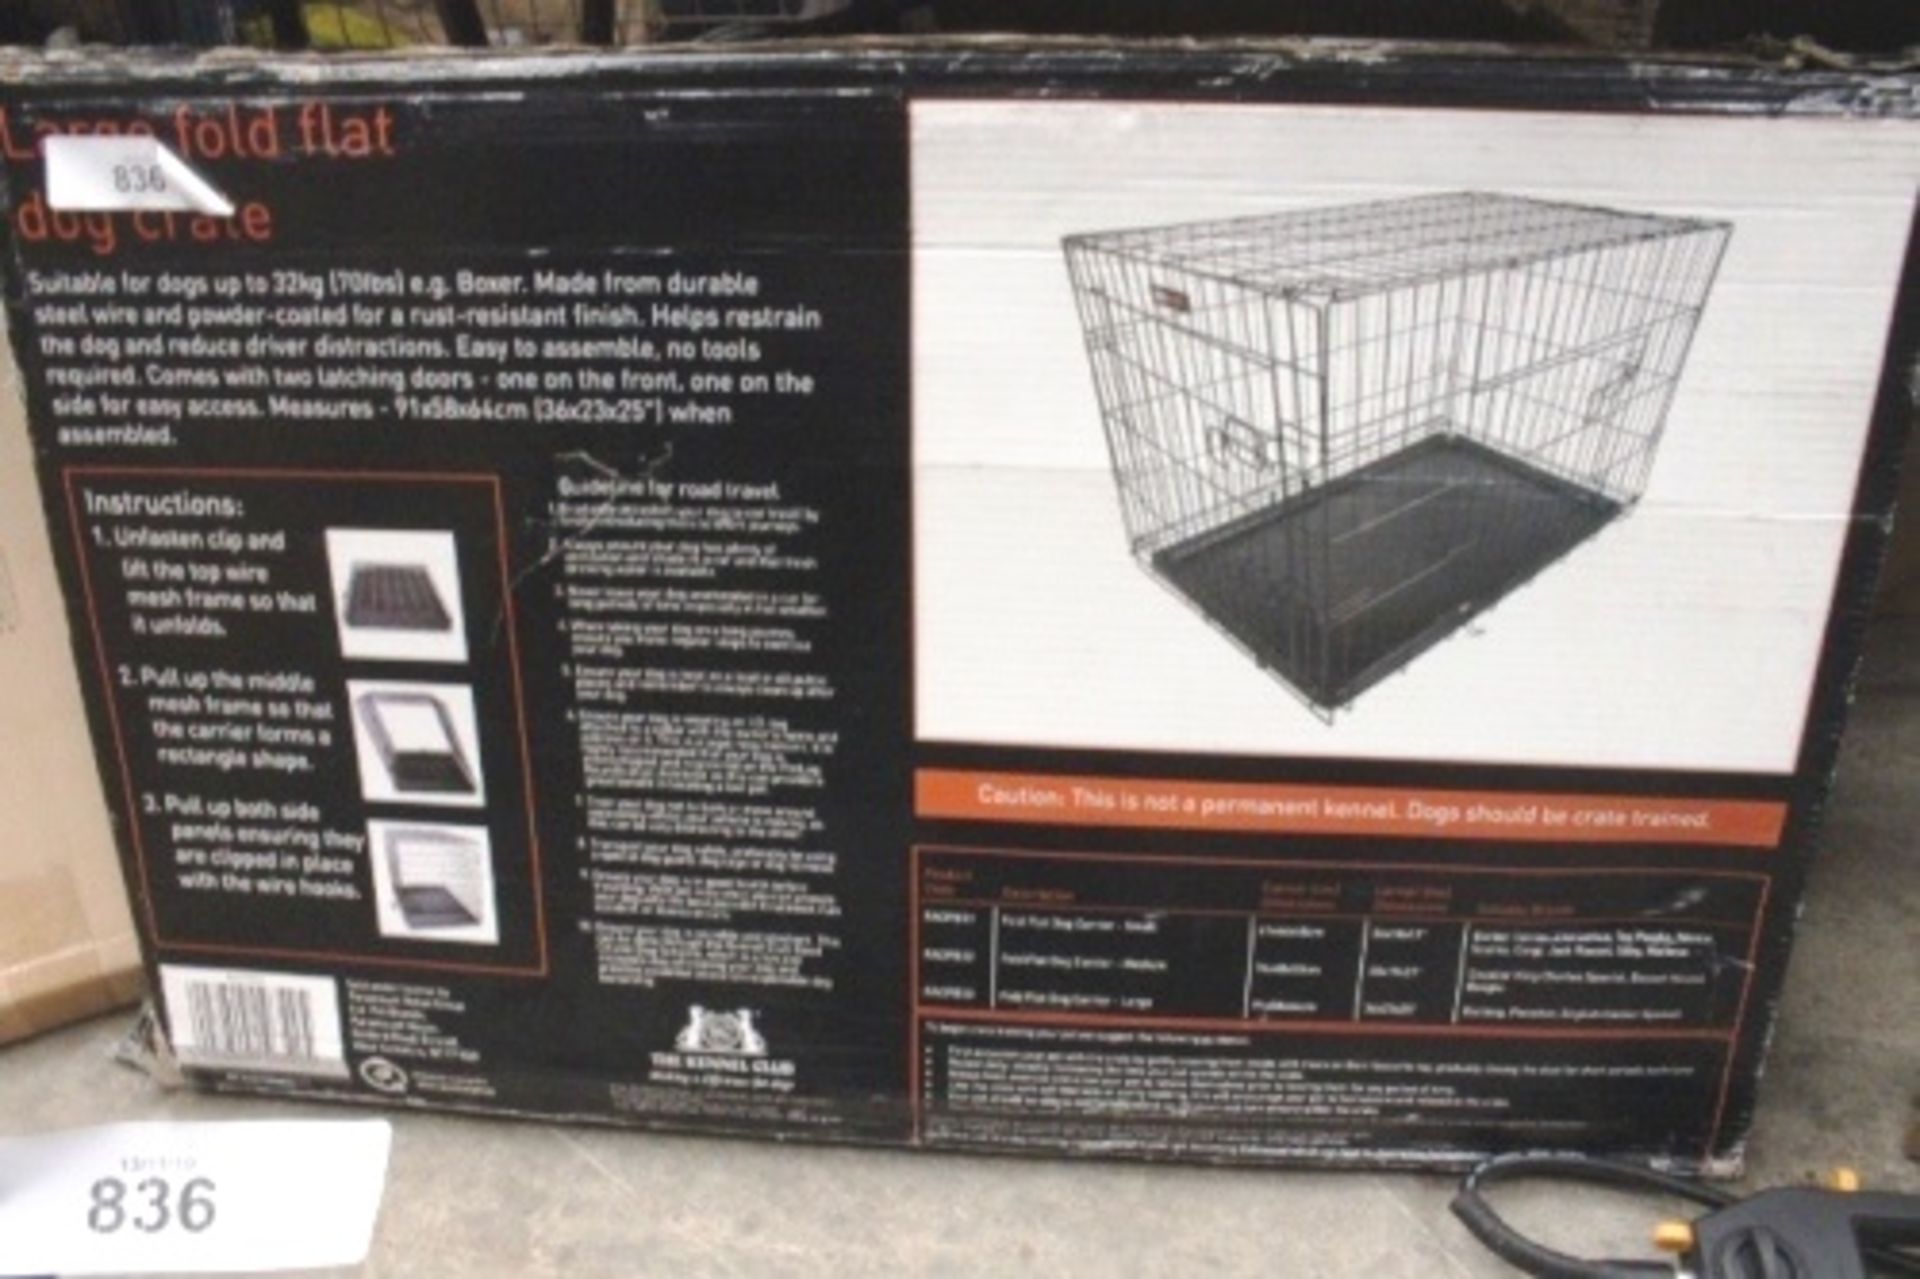 1 x RAC large fold flat dog crate - New in box (esfloor)